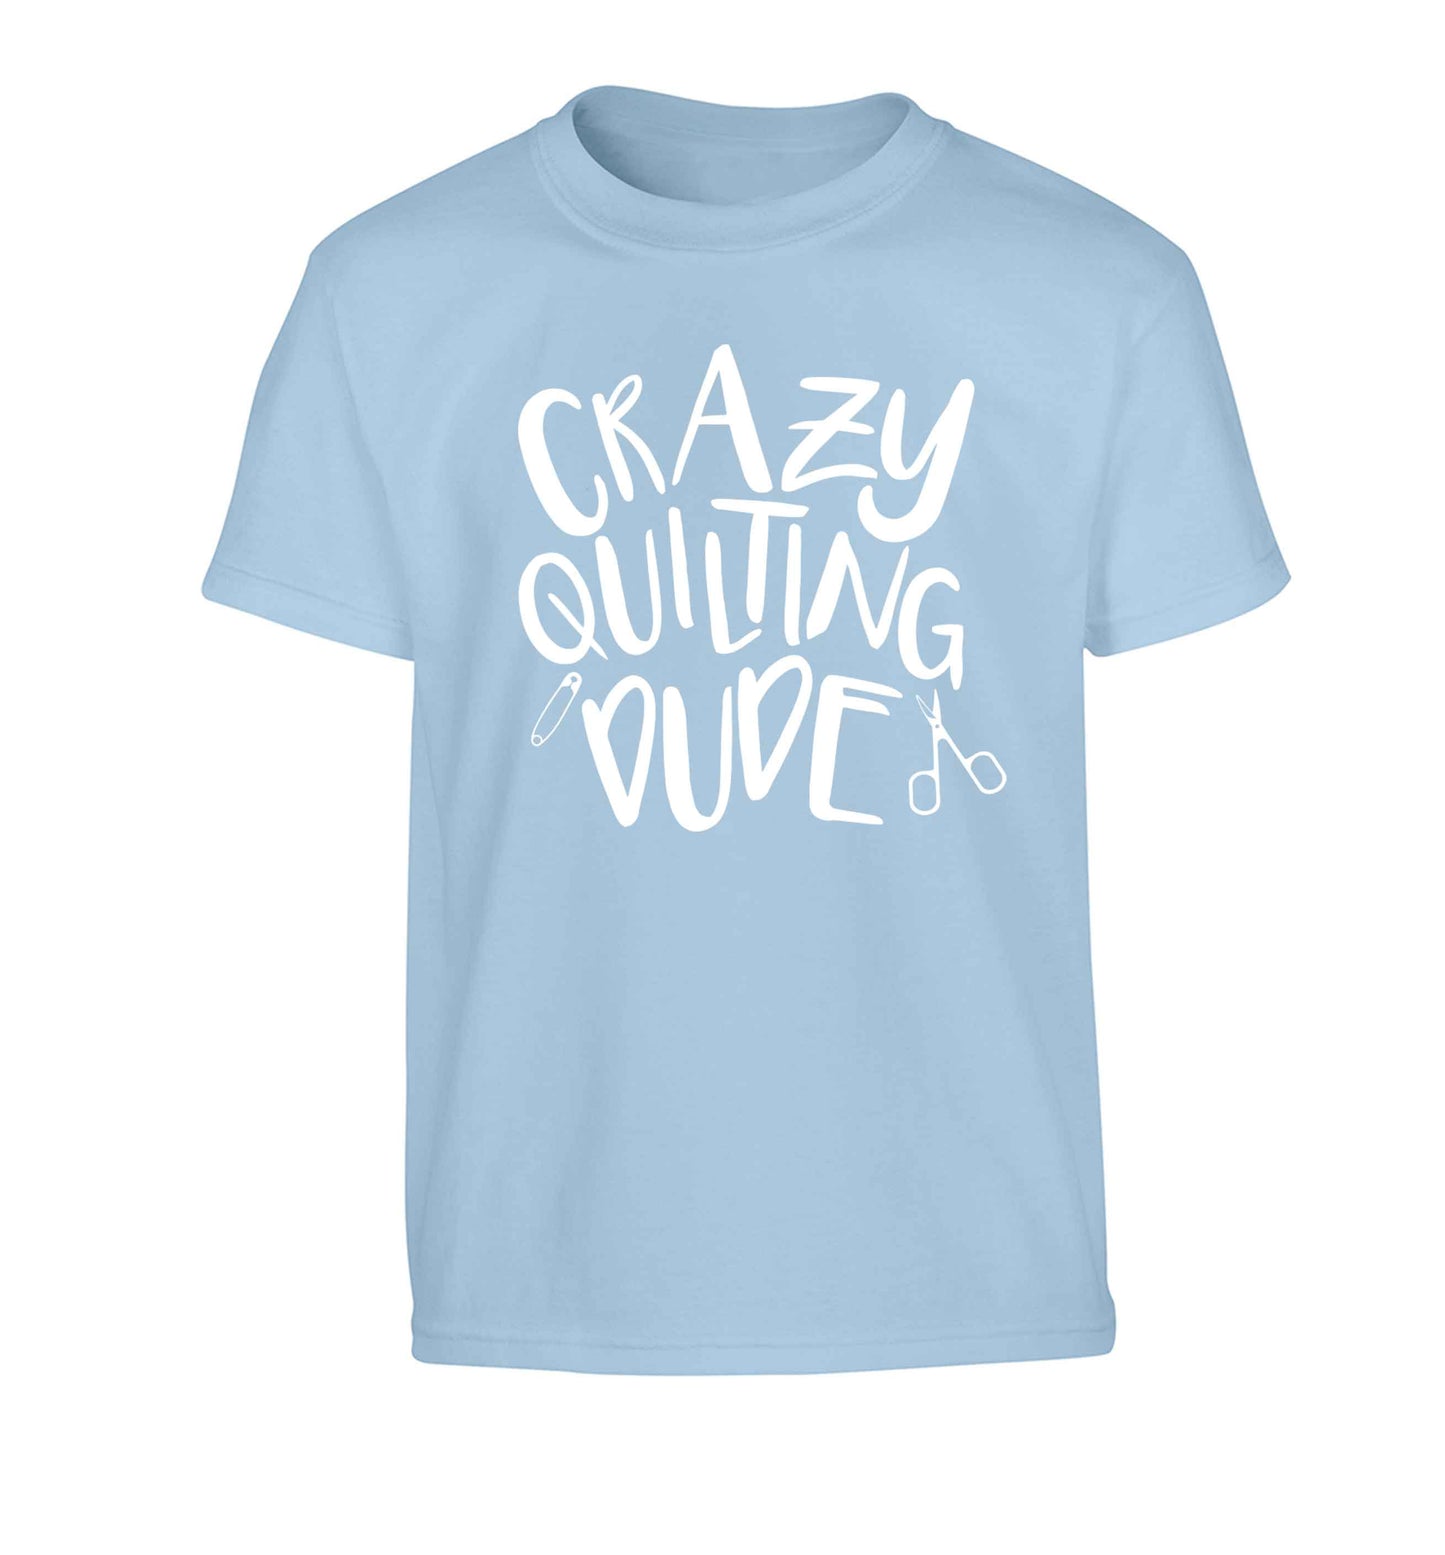 Crazy quilting dude Children's light blue Tshirt 12-13 Years